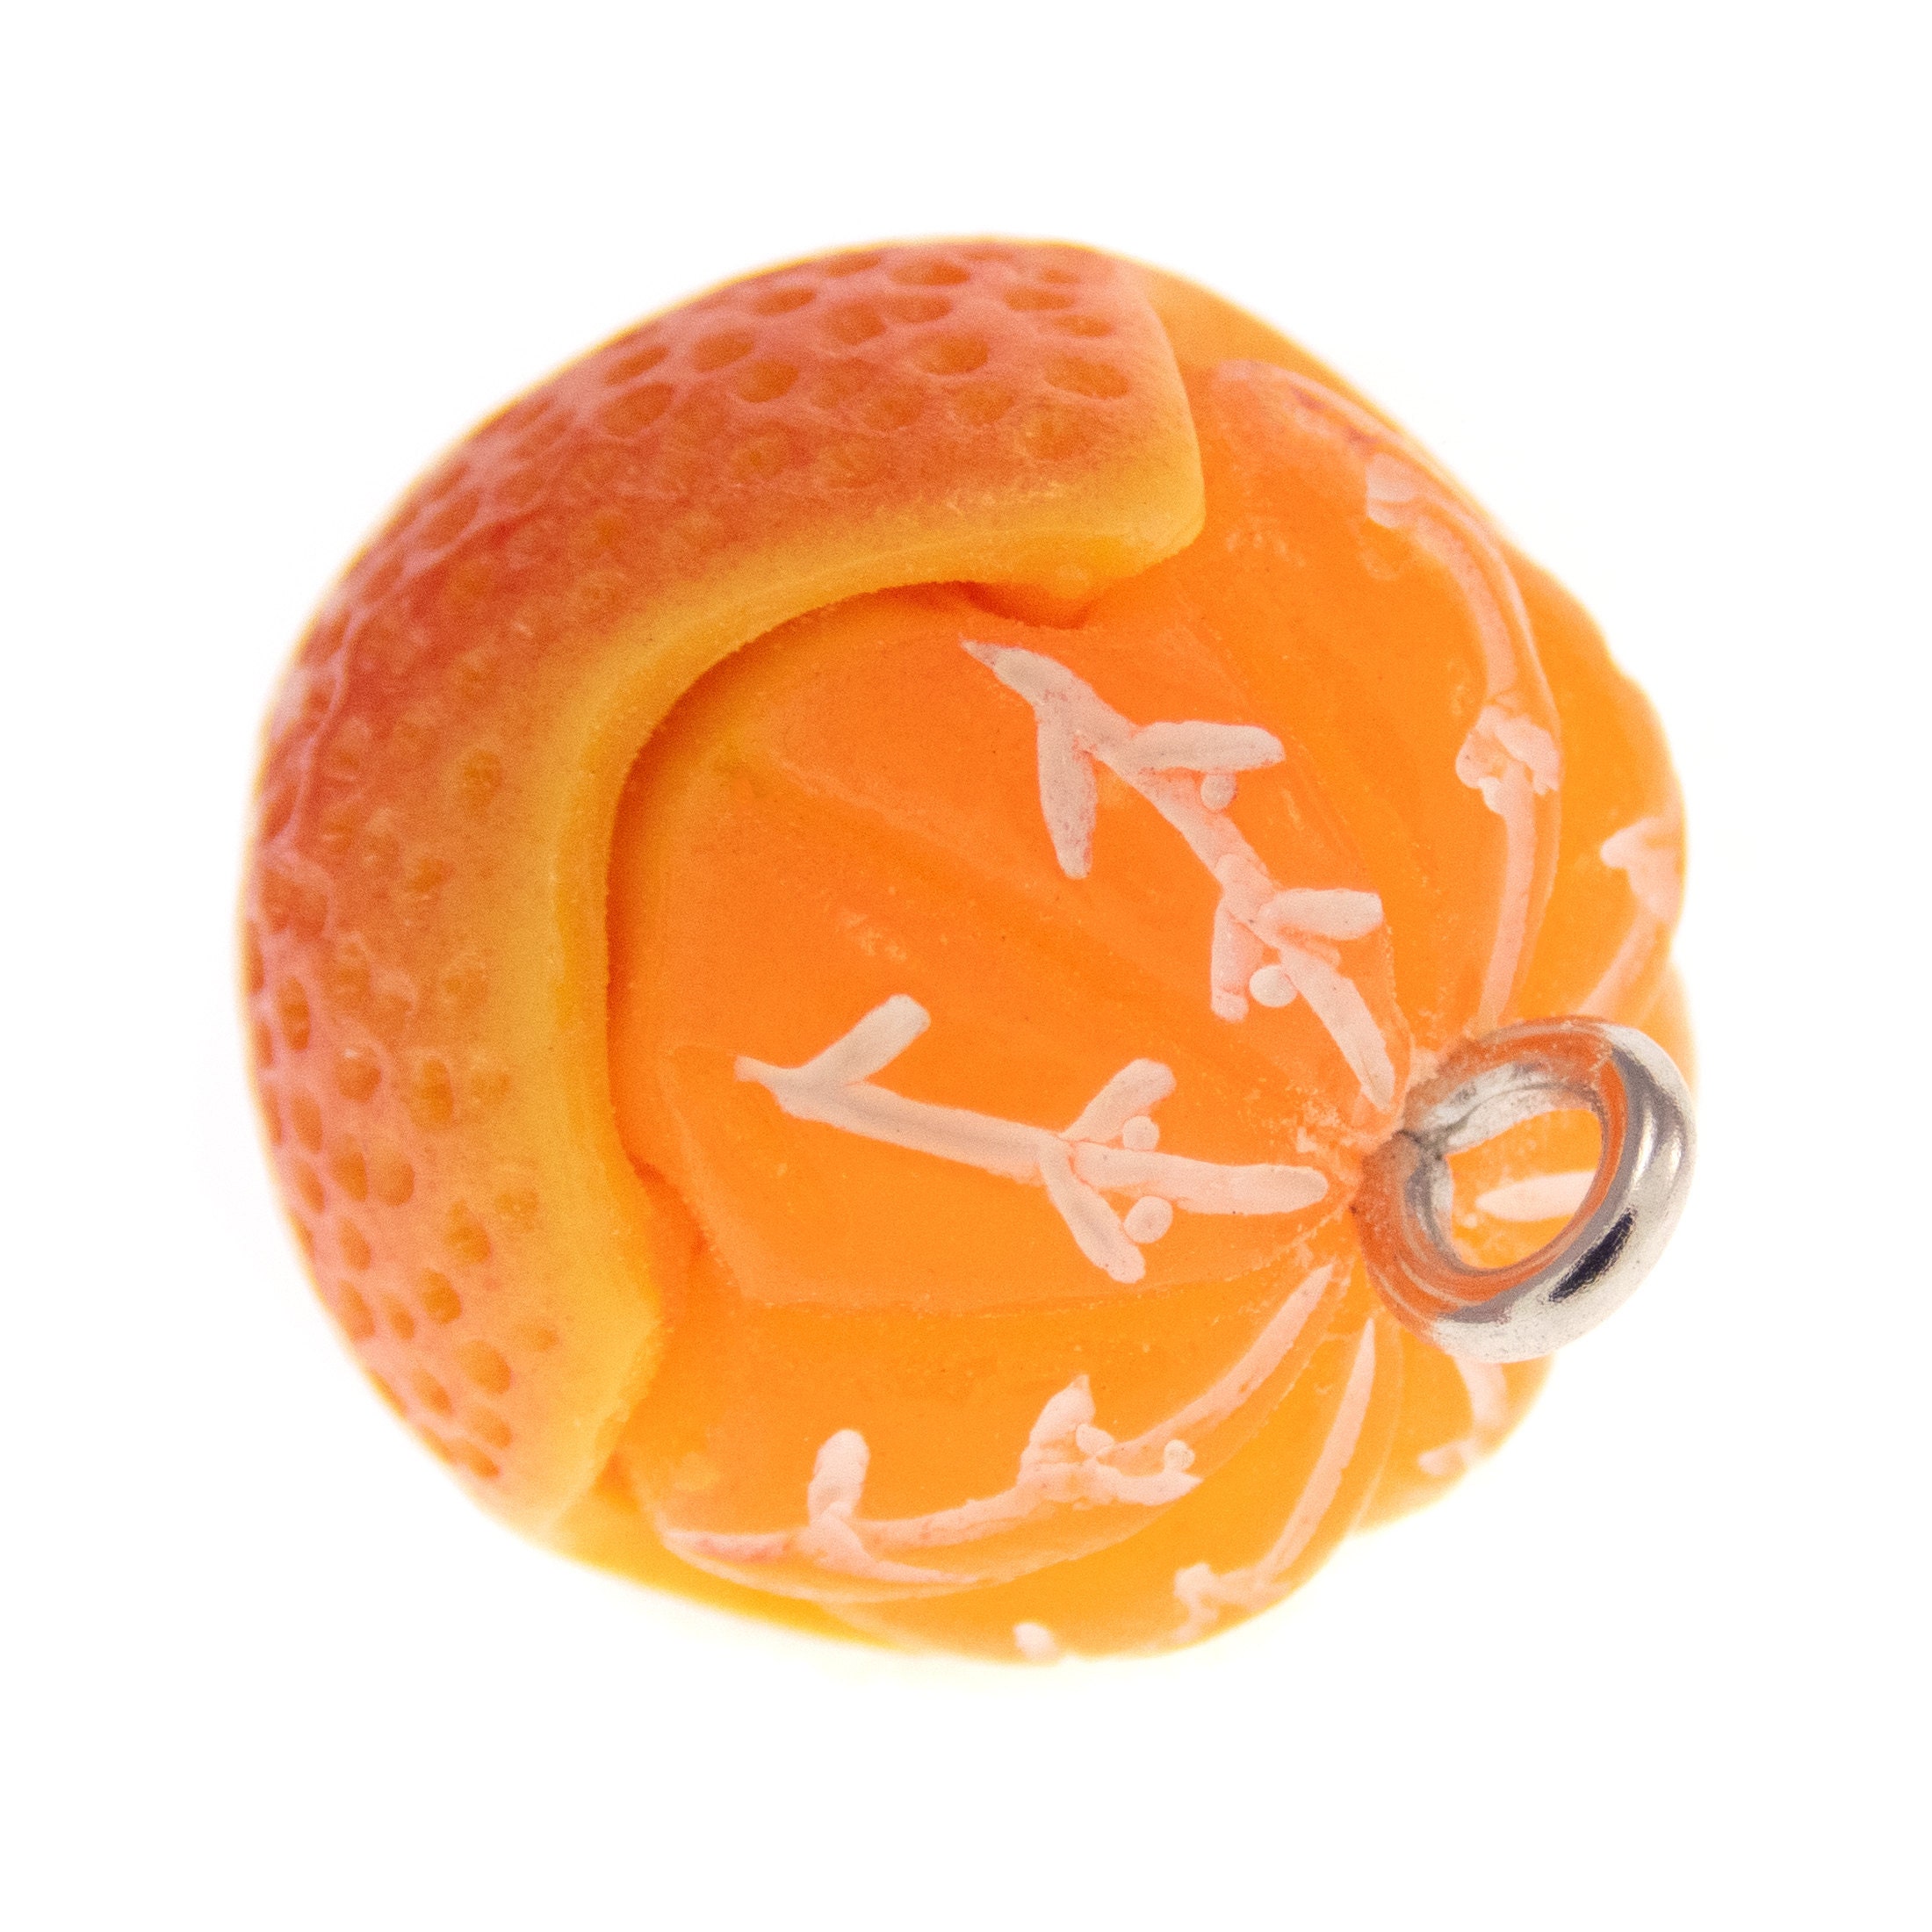 Fruit and Vegetable Jewellery. Orange Fruit Necklace